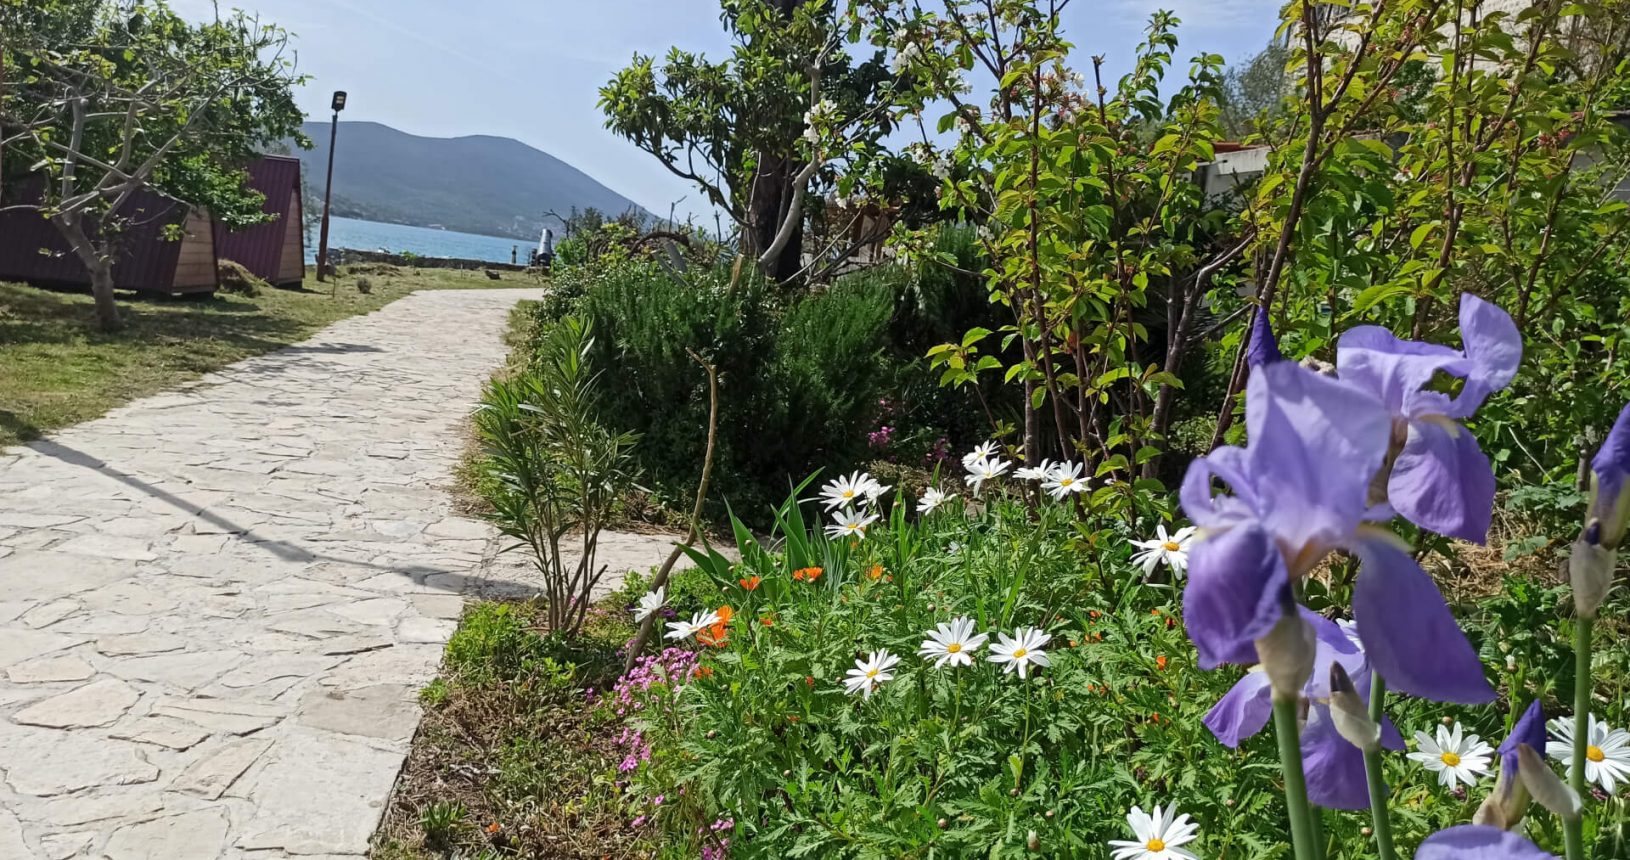 Beautiful flowers along the promenade on the island flowers